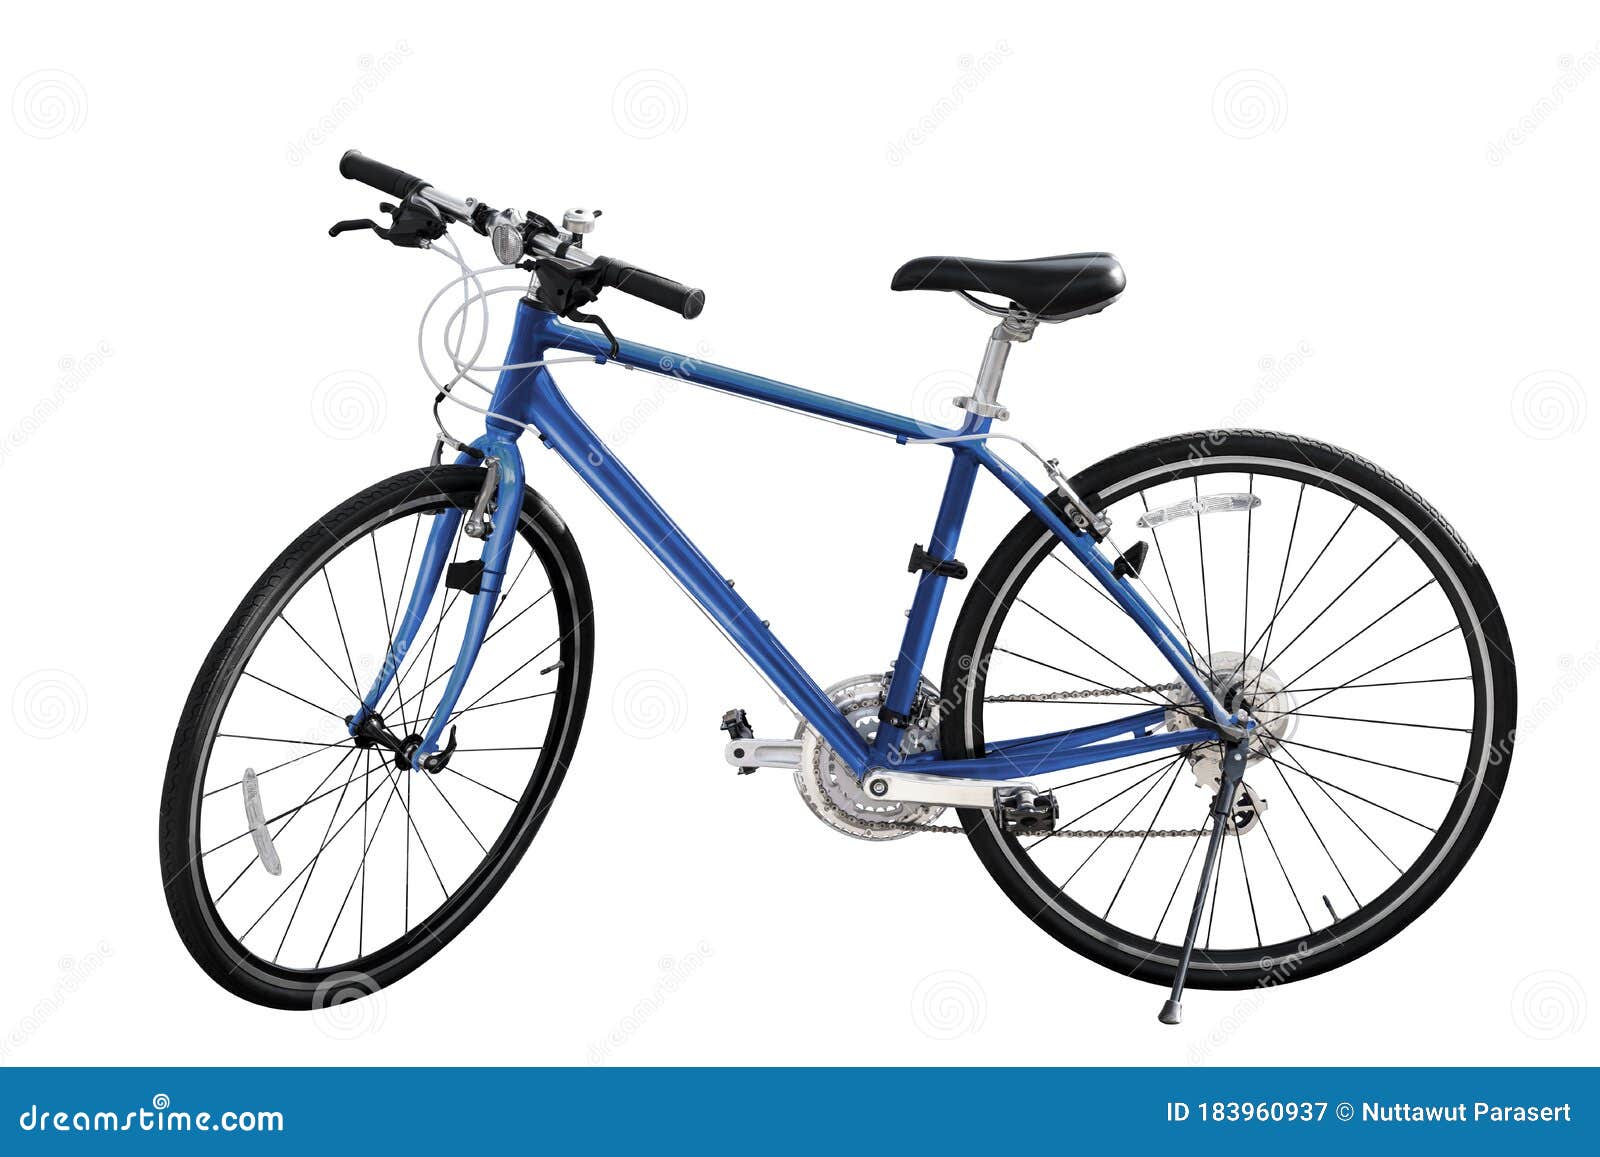 blue mountain bike seat